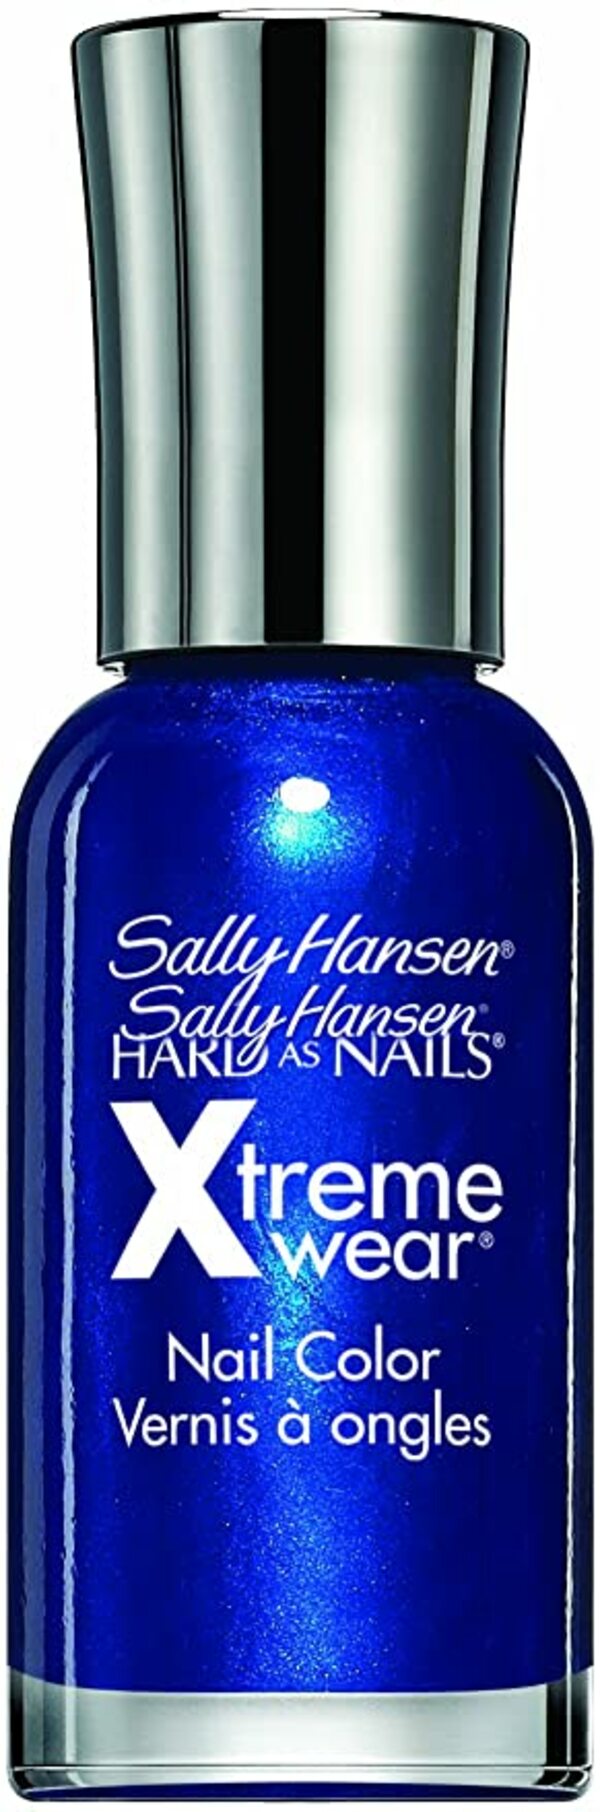 Nail polish swatch / manicure of shade Sally Hansen Blue It